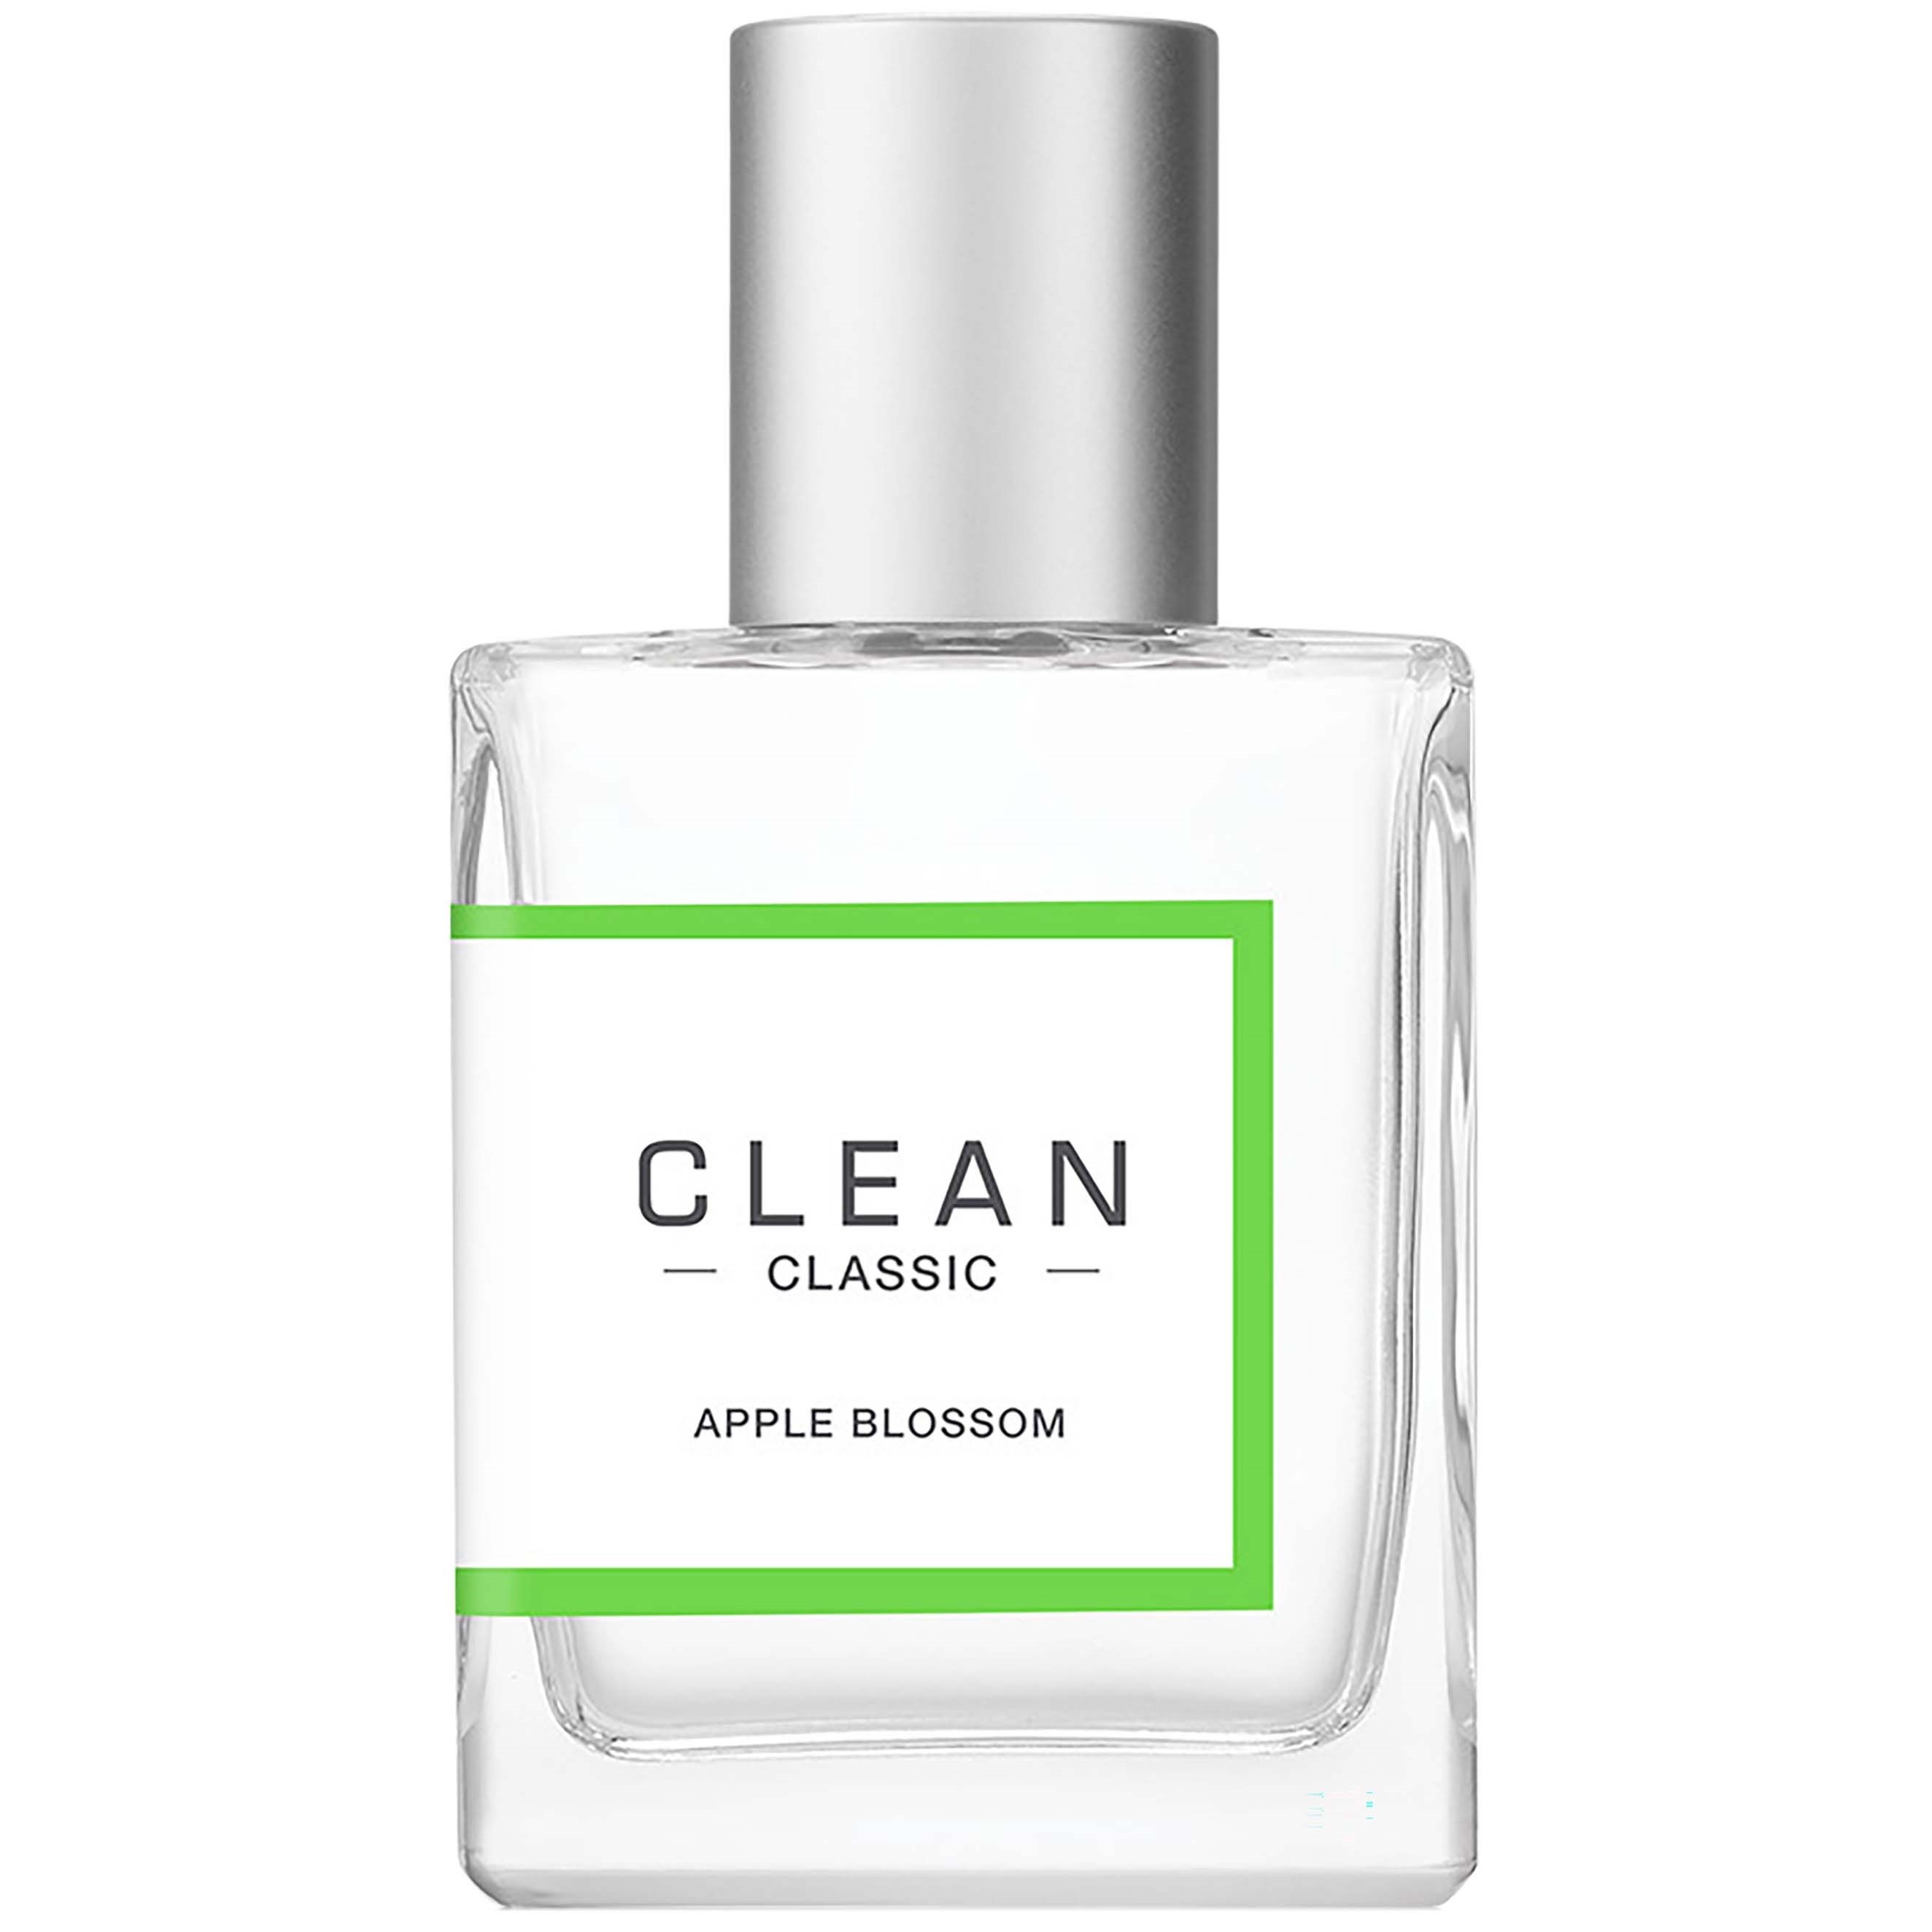 Zdjęcia - Perfuma damska Clean Classic Apple Blossom Eau de parfum 30ml - Woda perfumowana 